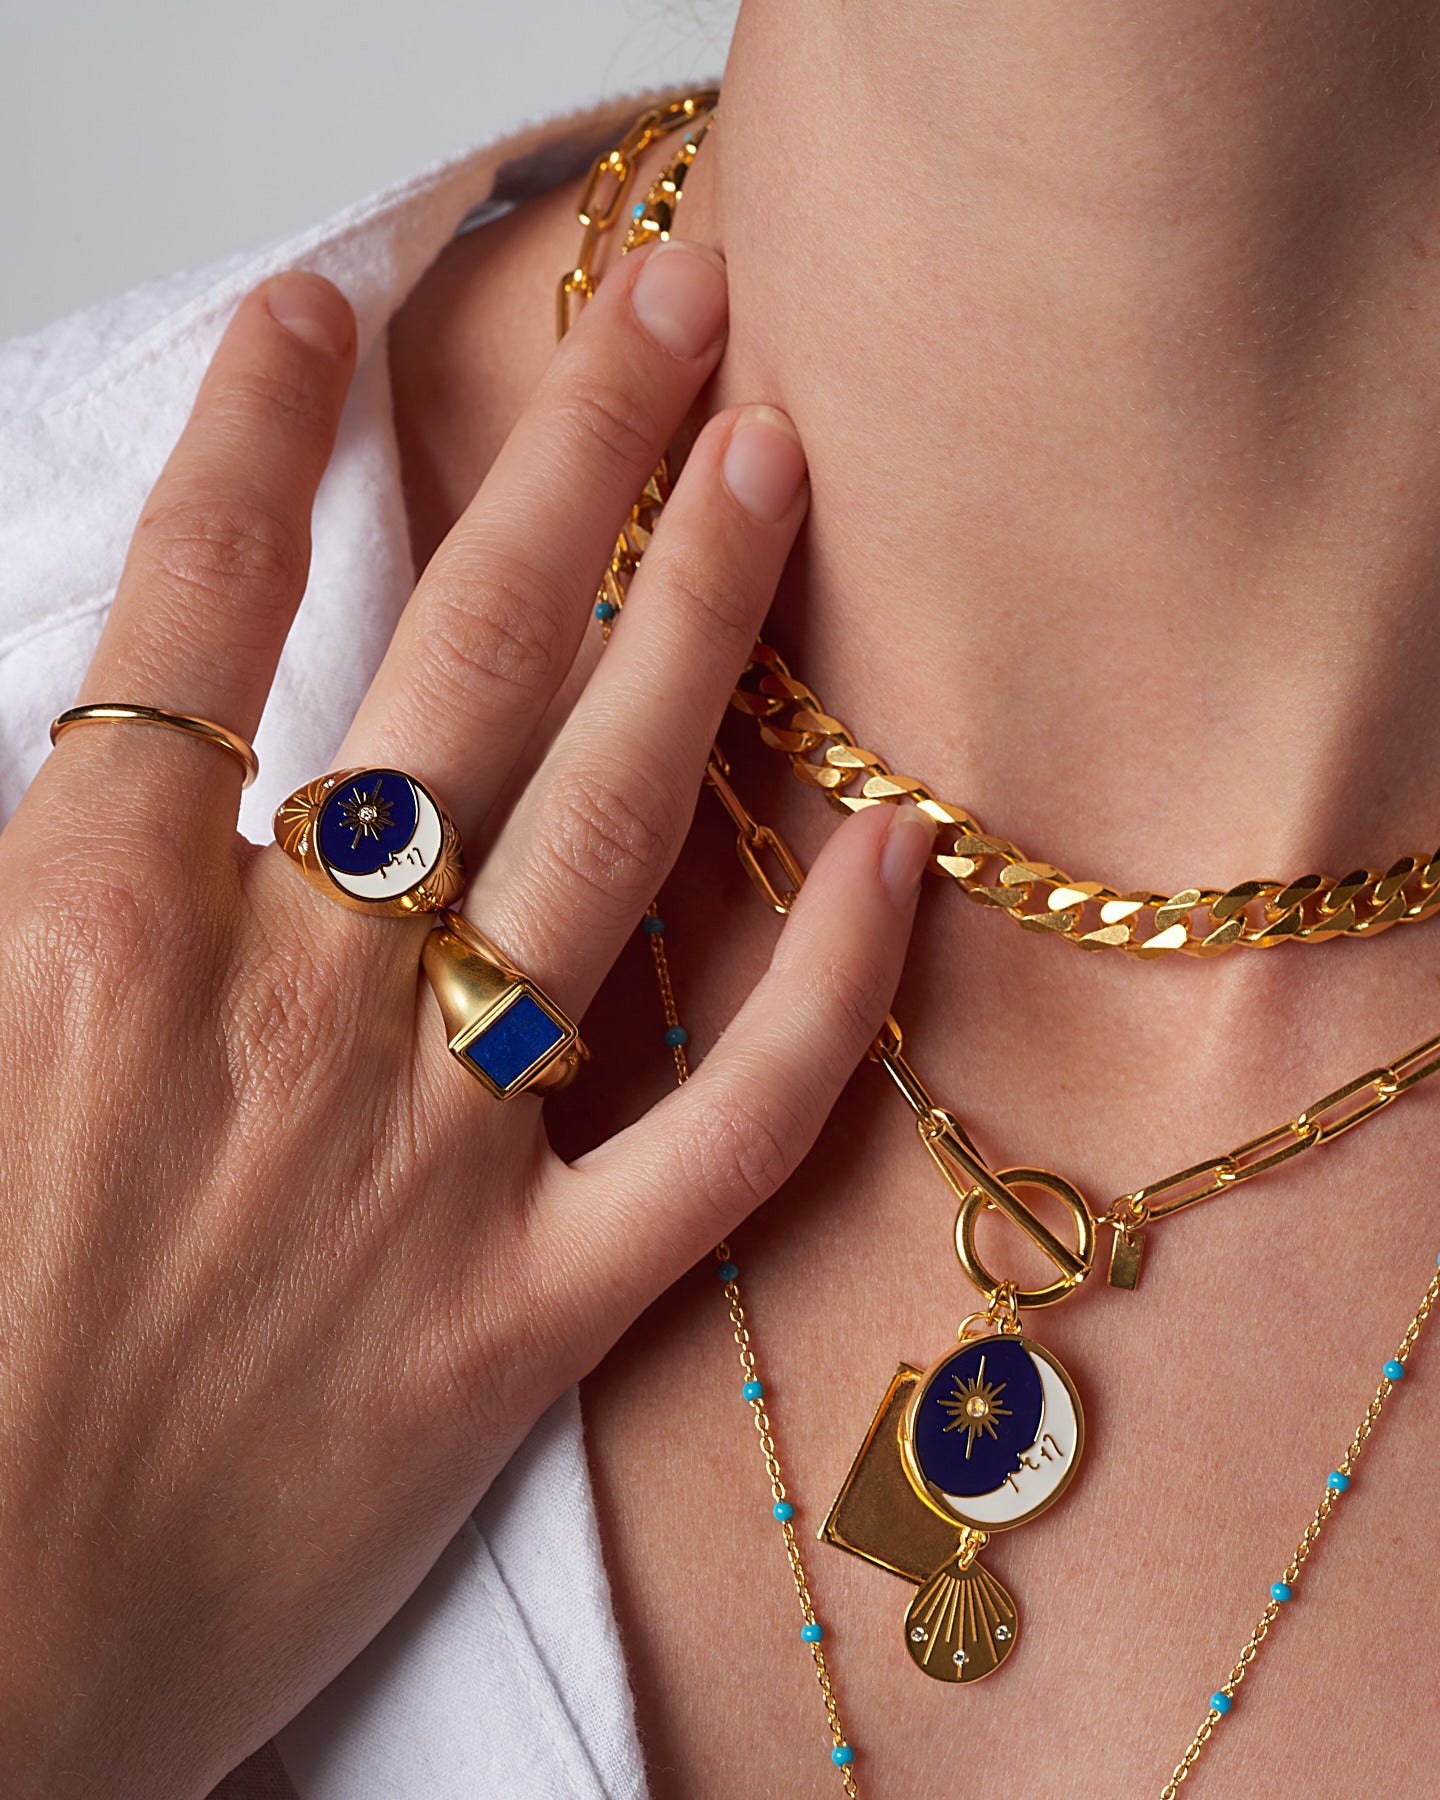 Bezel-Set Lapis Lazuli Signet Ring